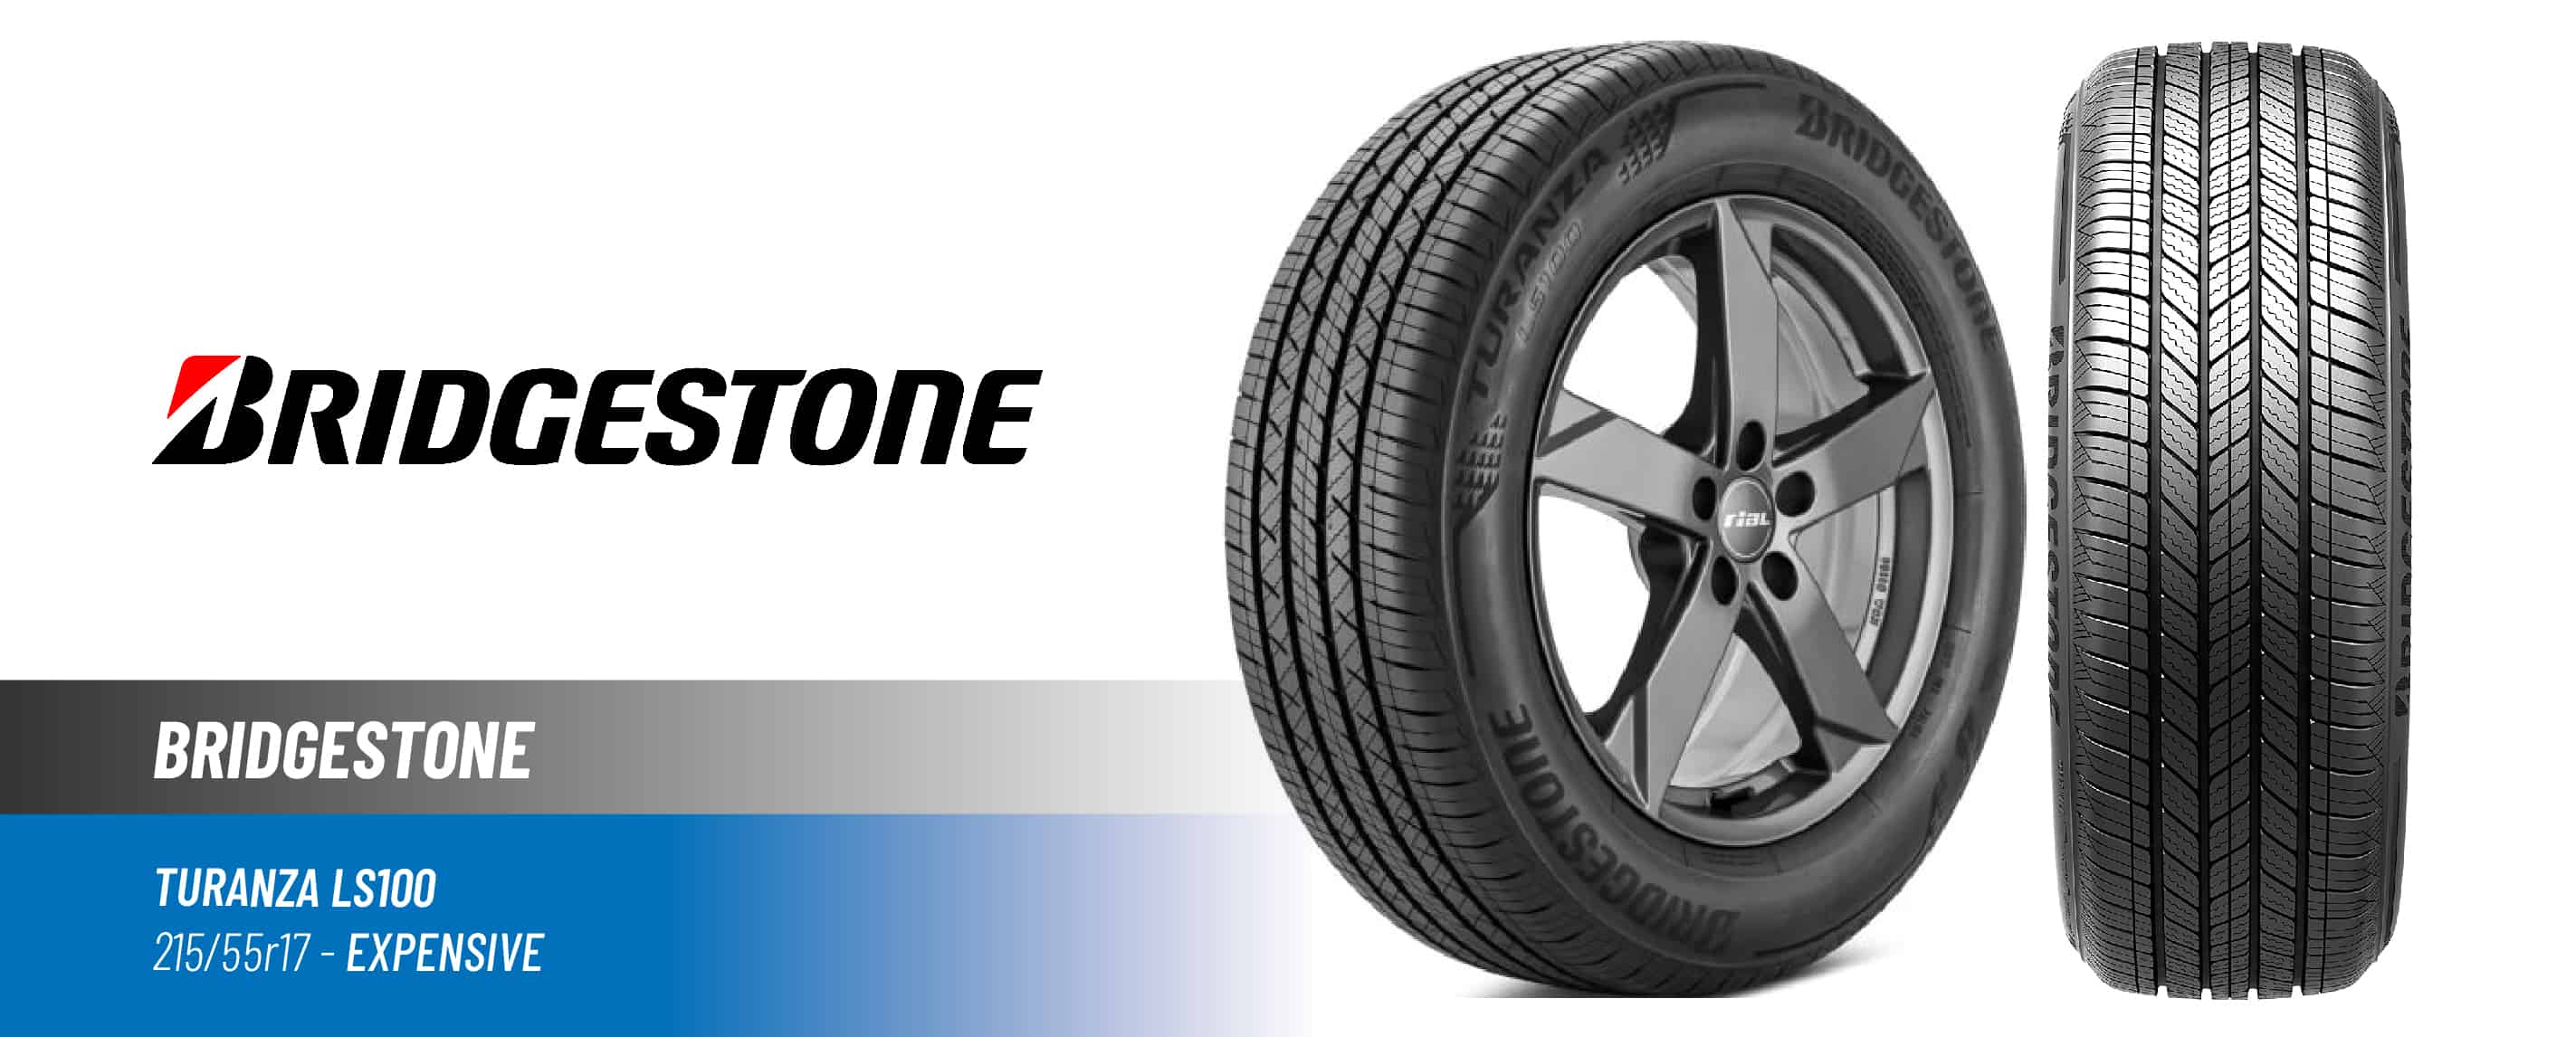 Top#1 High Price: Bridgestone Turanza LS100 – 215 55 r17